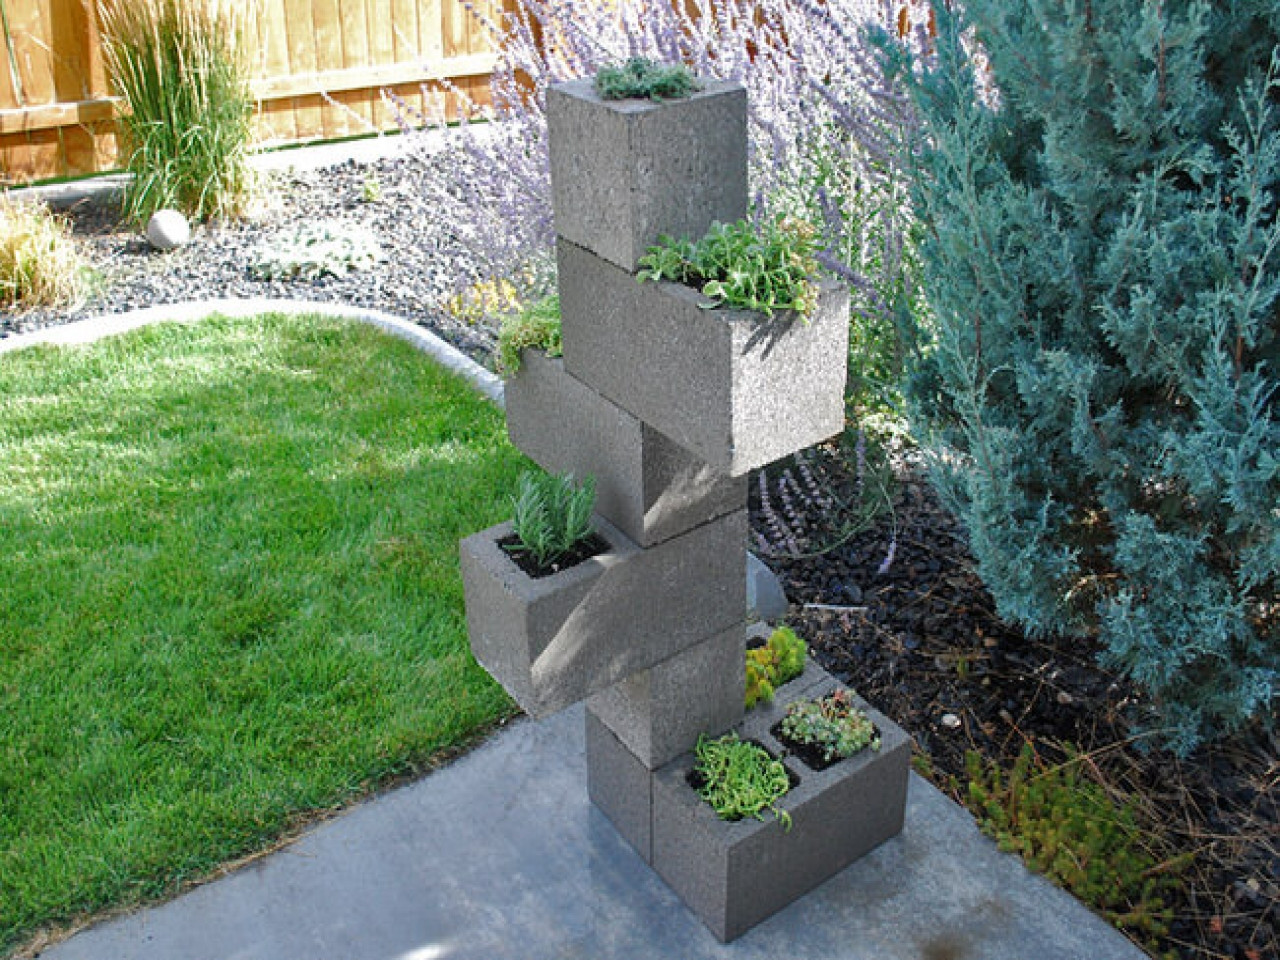 Best ideas about Cinder Block Planter Box
. Save or Pin Big wall decoration ideas concrete block planters diy Now.